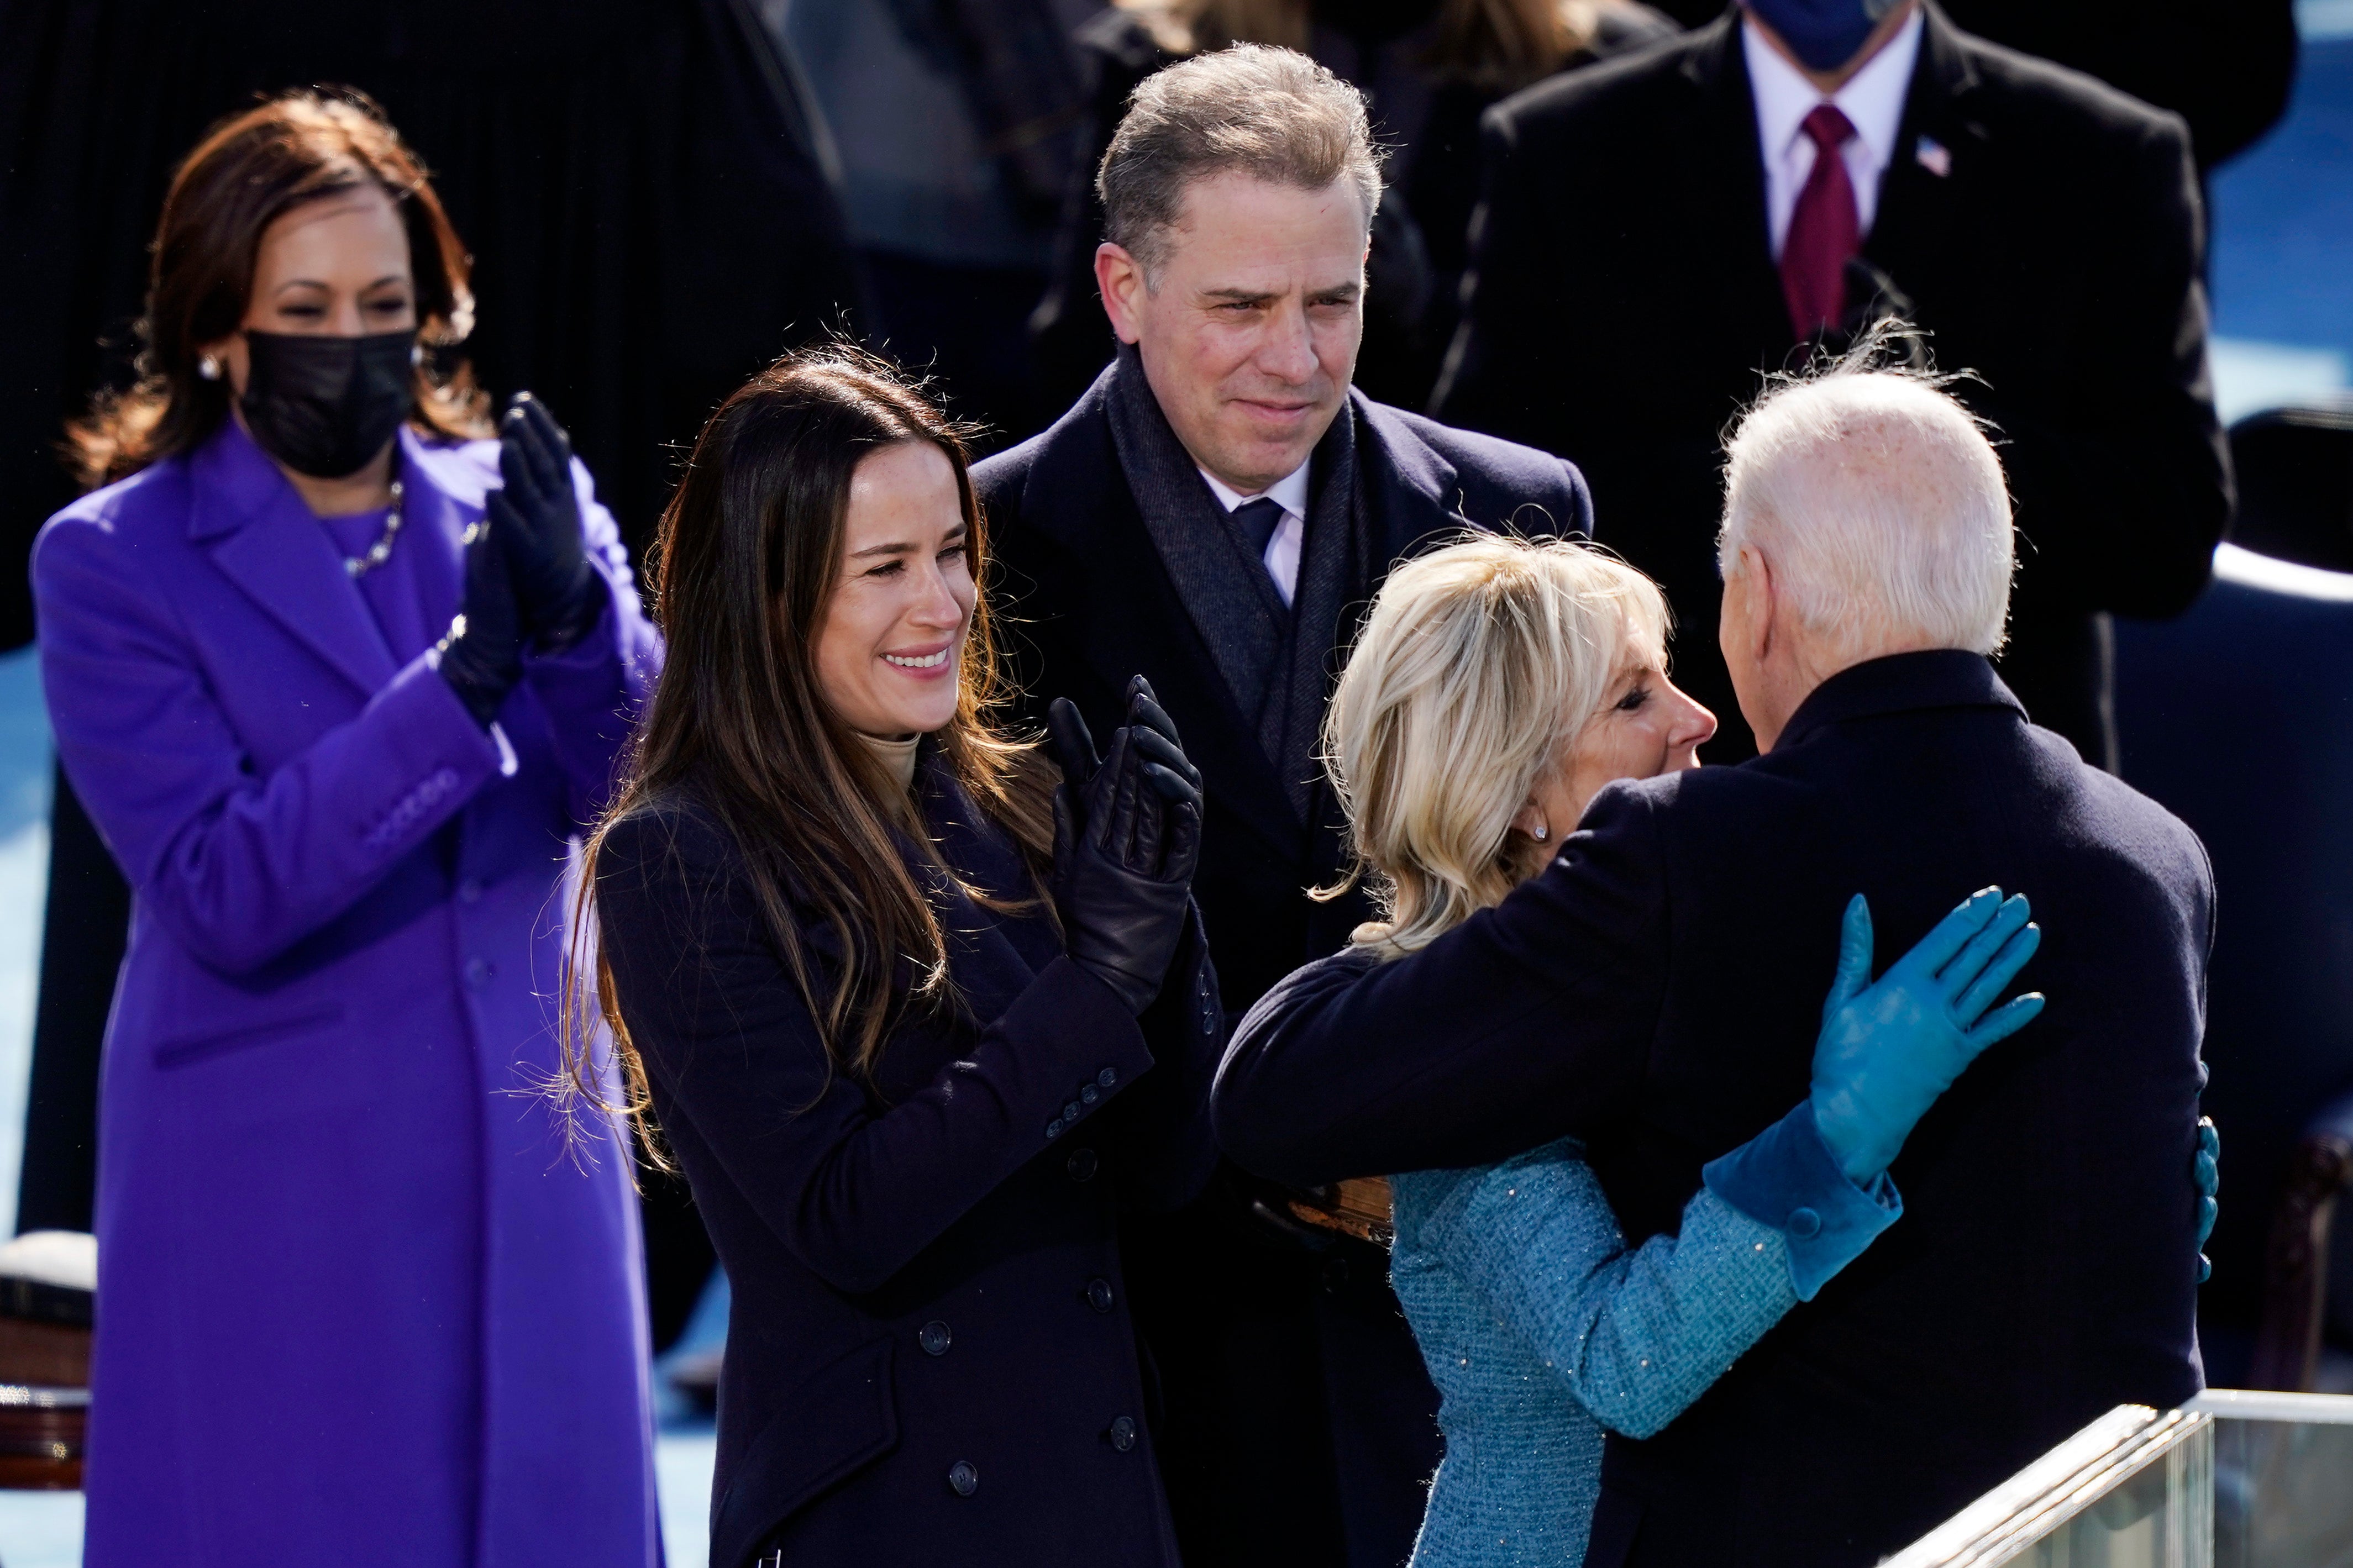 Ashley Biden and Hunter Biden look on as Joe Biden embraces his wife Jill Biden during his presidential inauguration